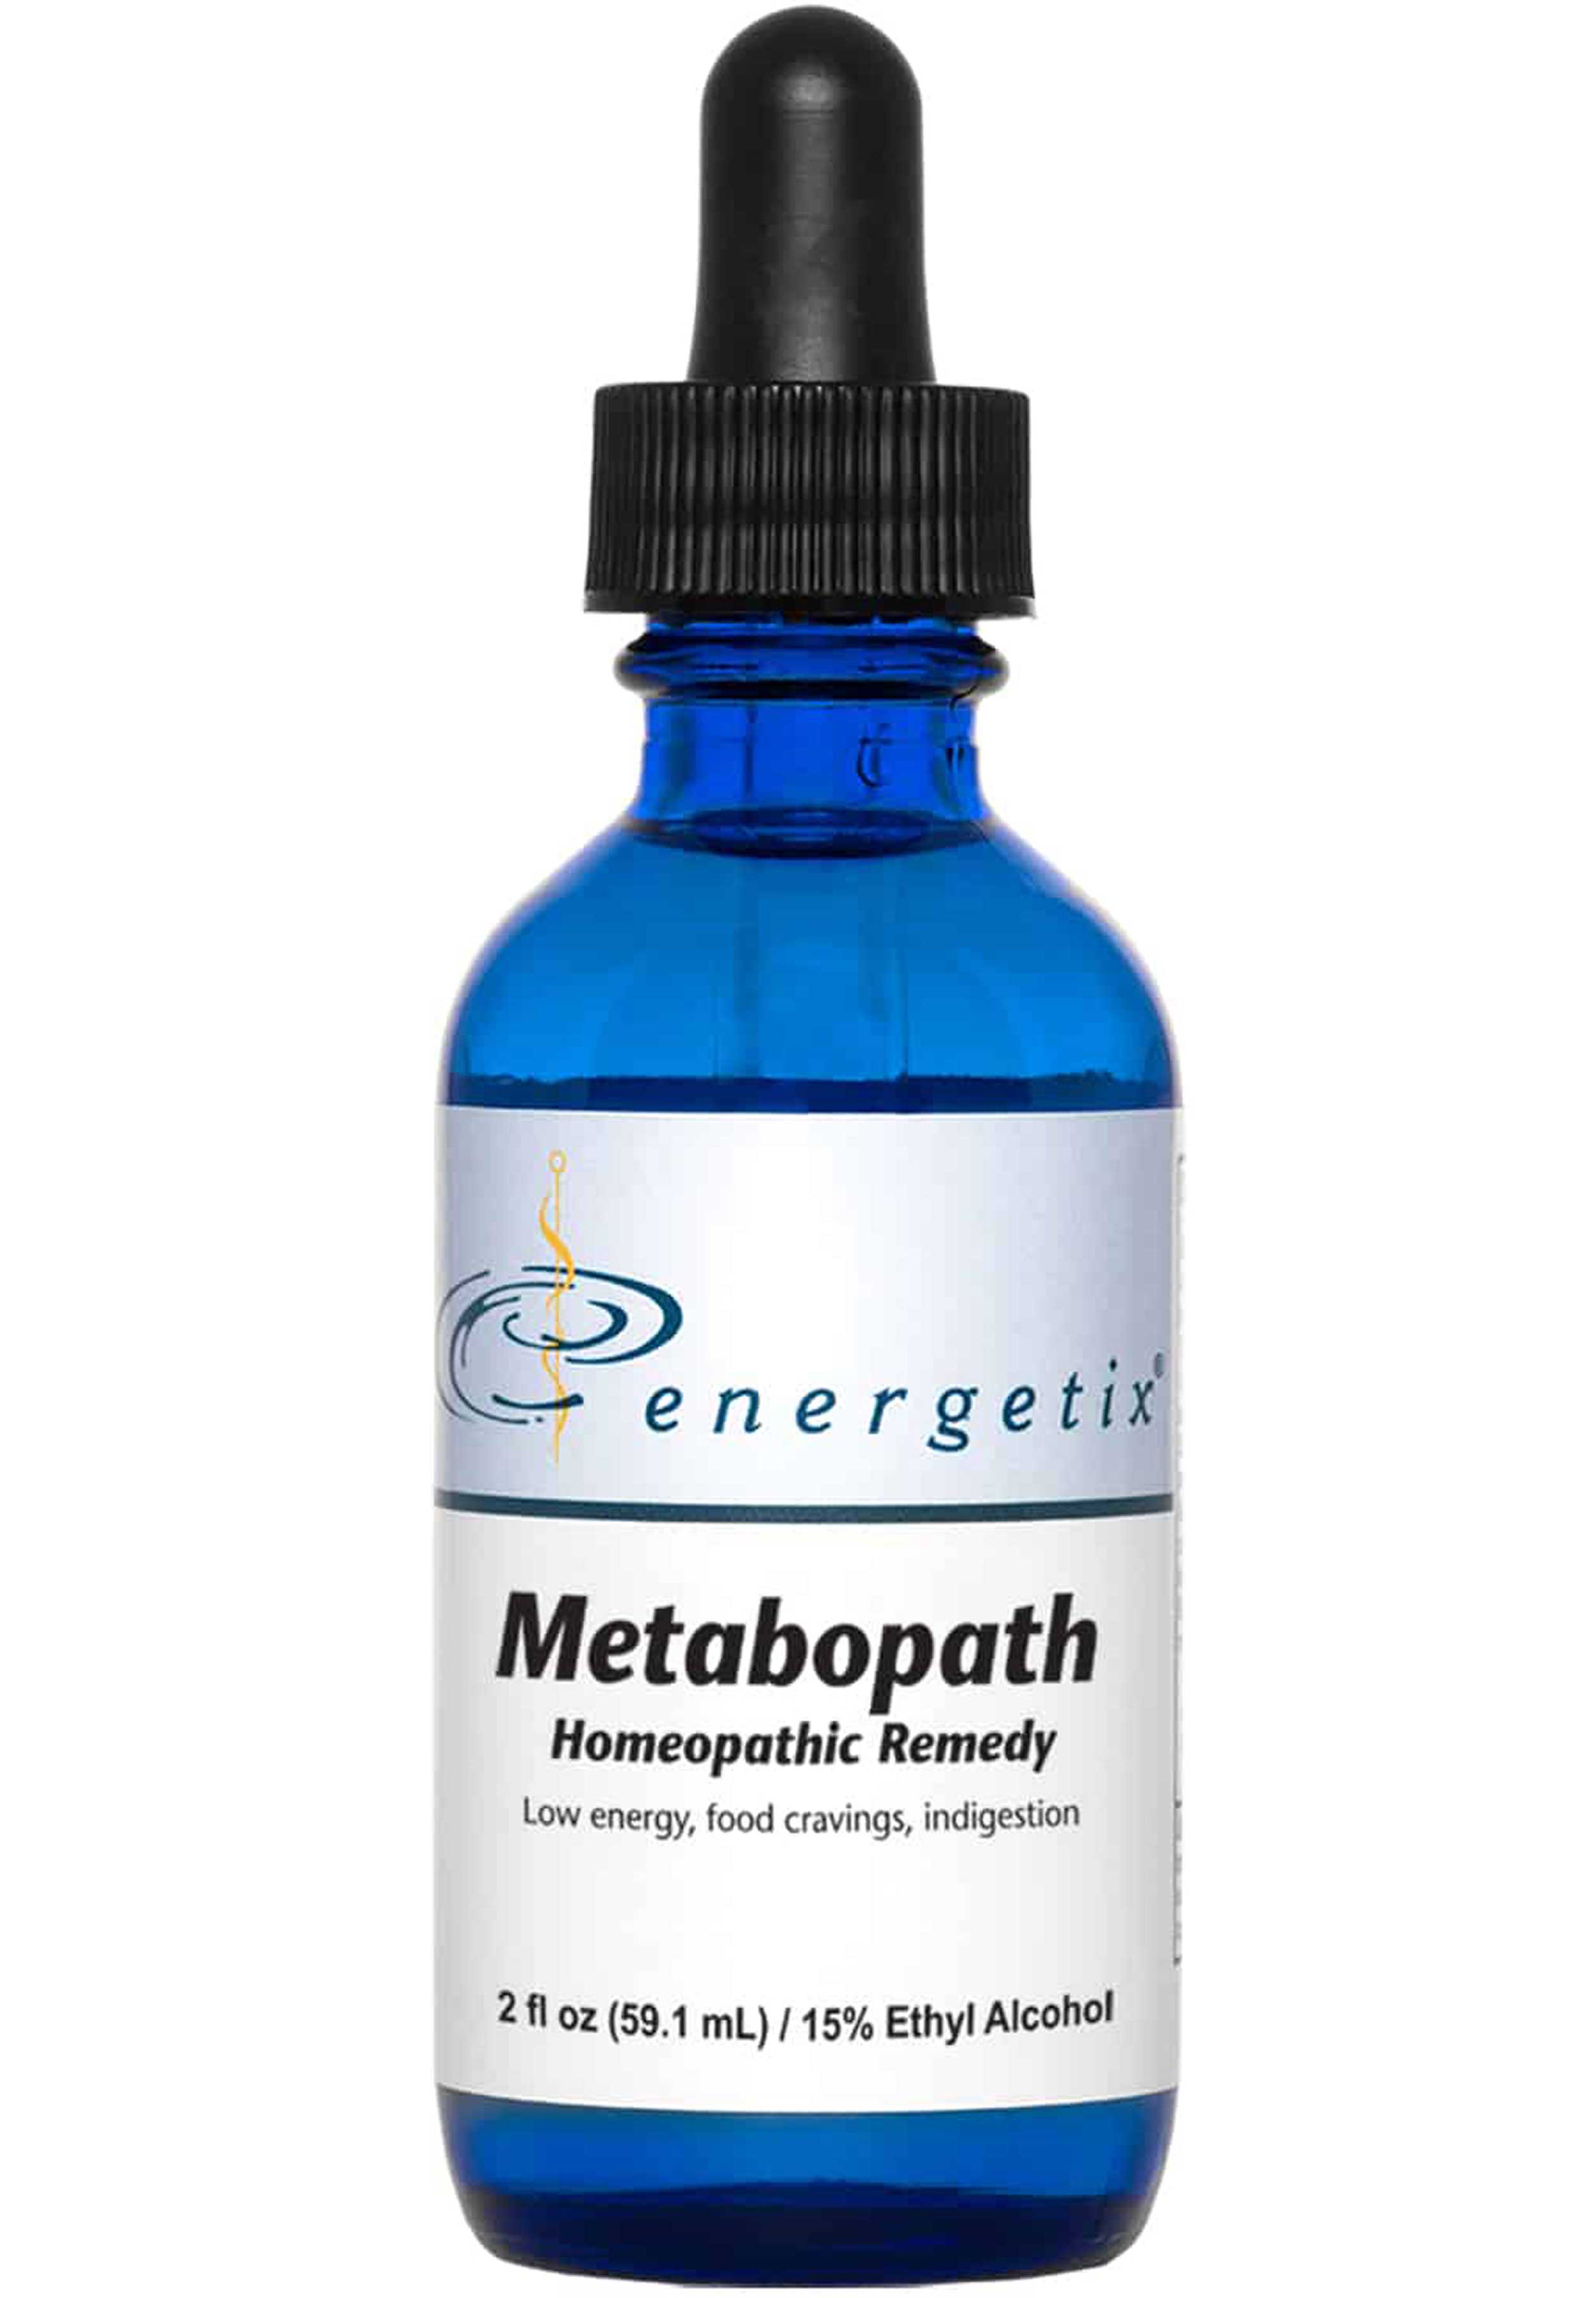 Energetix Metabopath